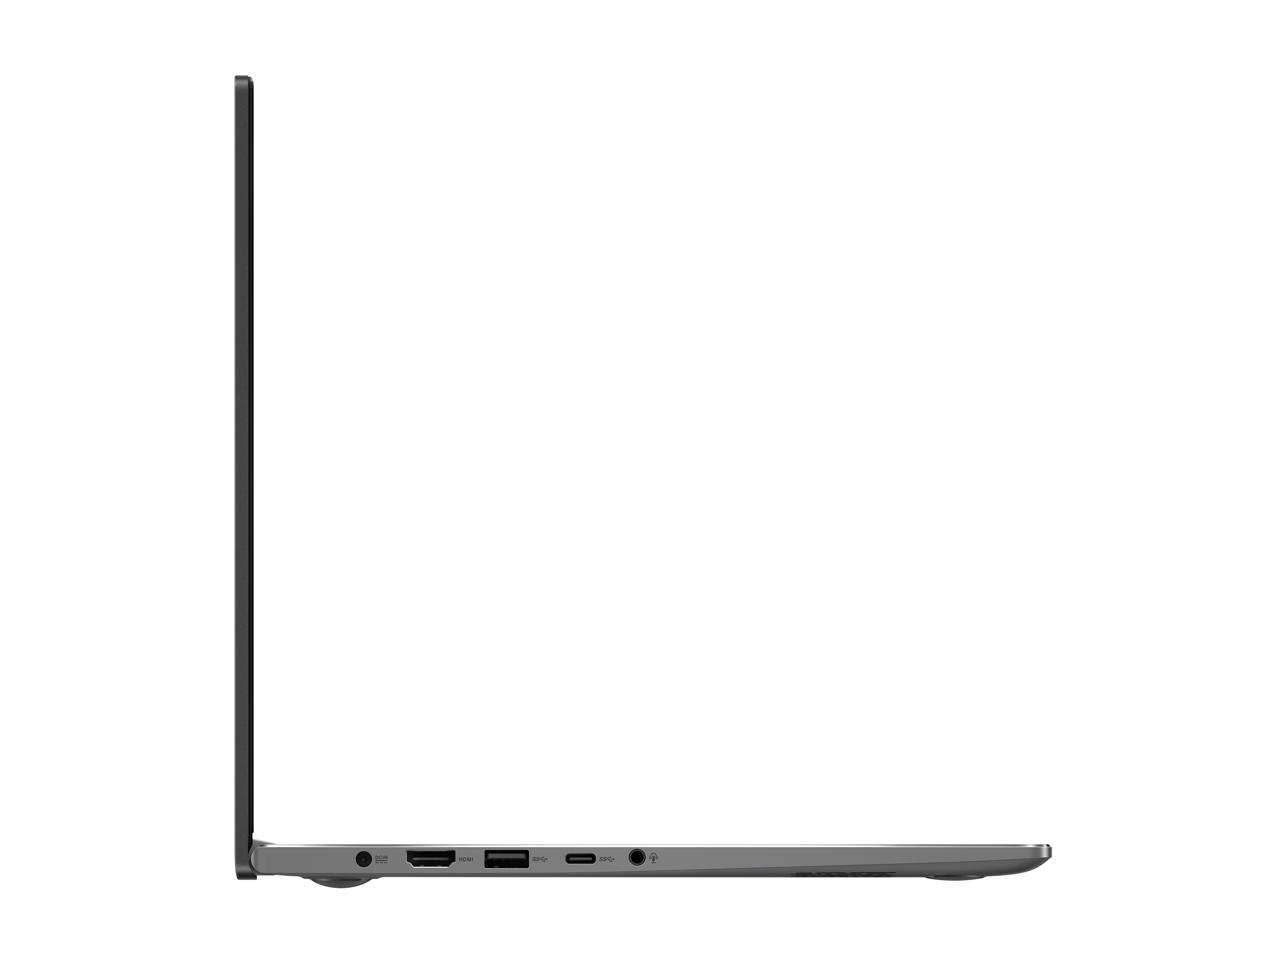 ASUS VivoBook S15 S533 Thin and Light Laptop, 15.6” FHD Display, Intel Core  i5-1135G7 Processor, 8GB DDR4 RAM, 512GB PCIe SSD, Wi-Fi 6, Windows 10